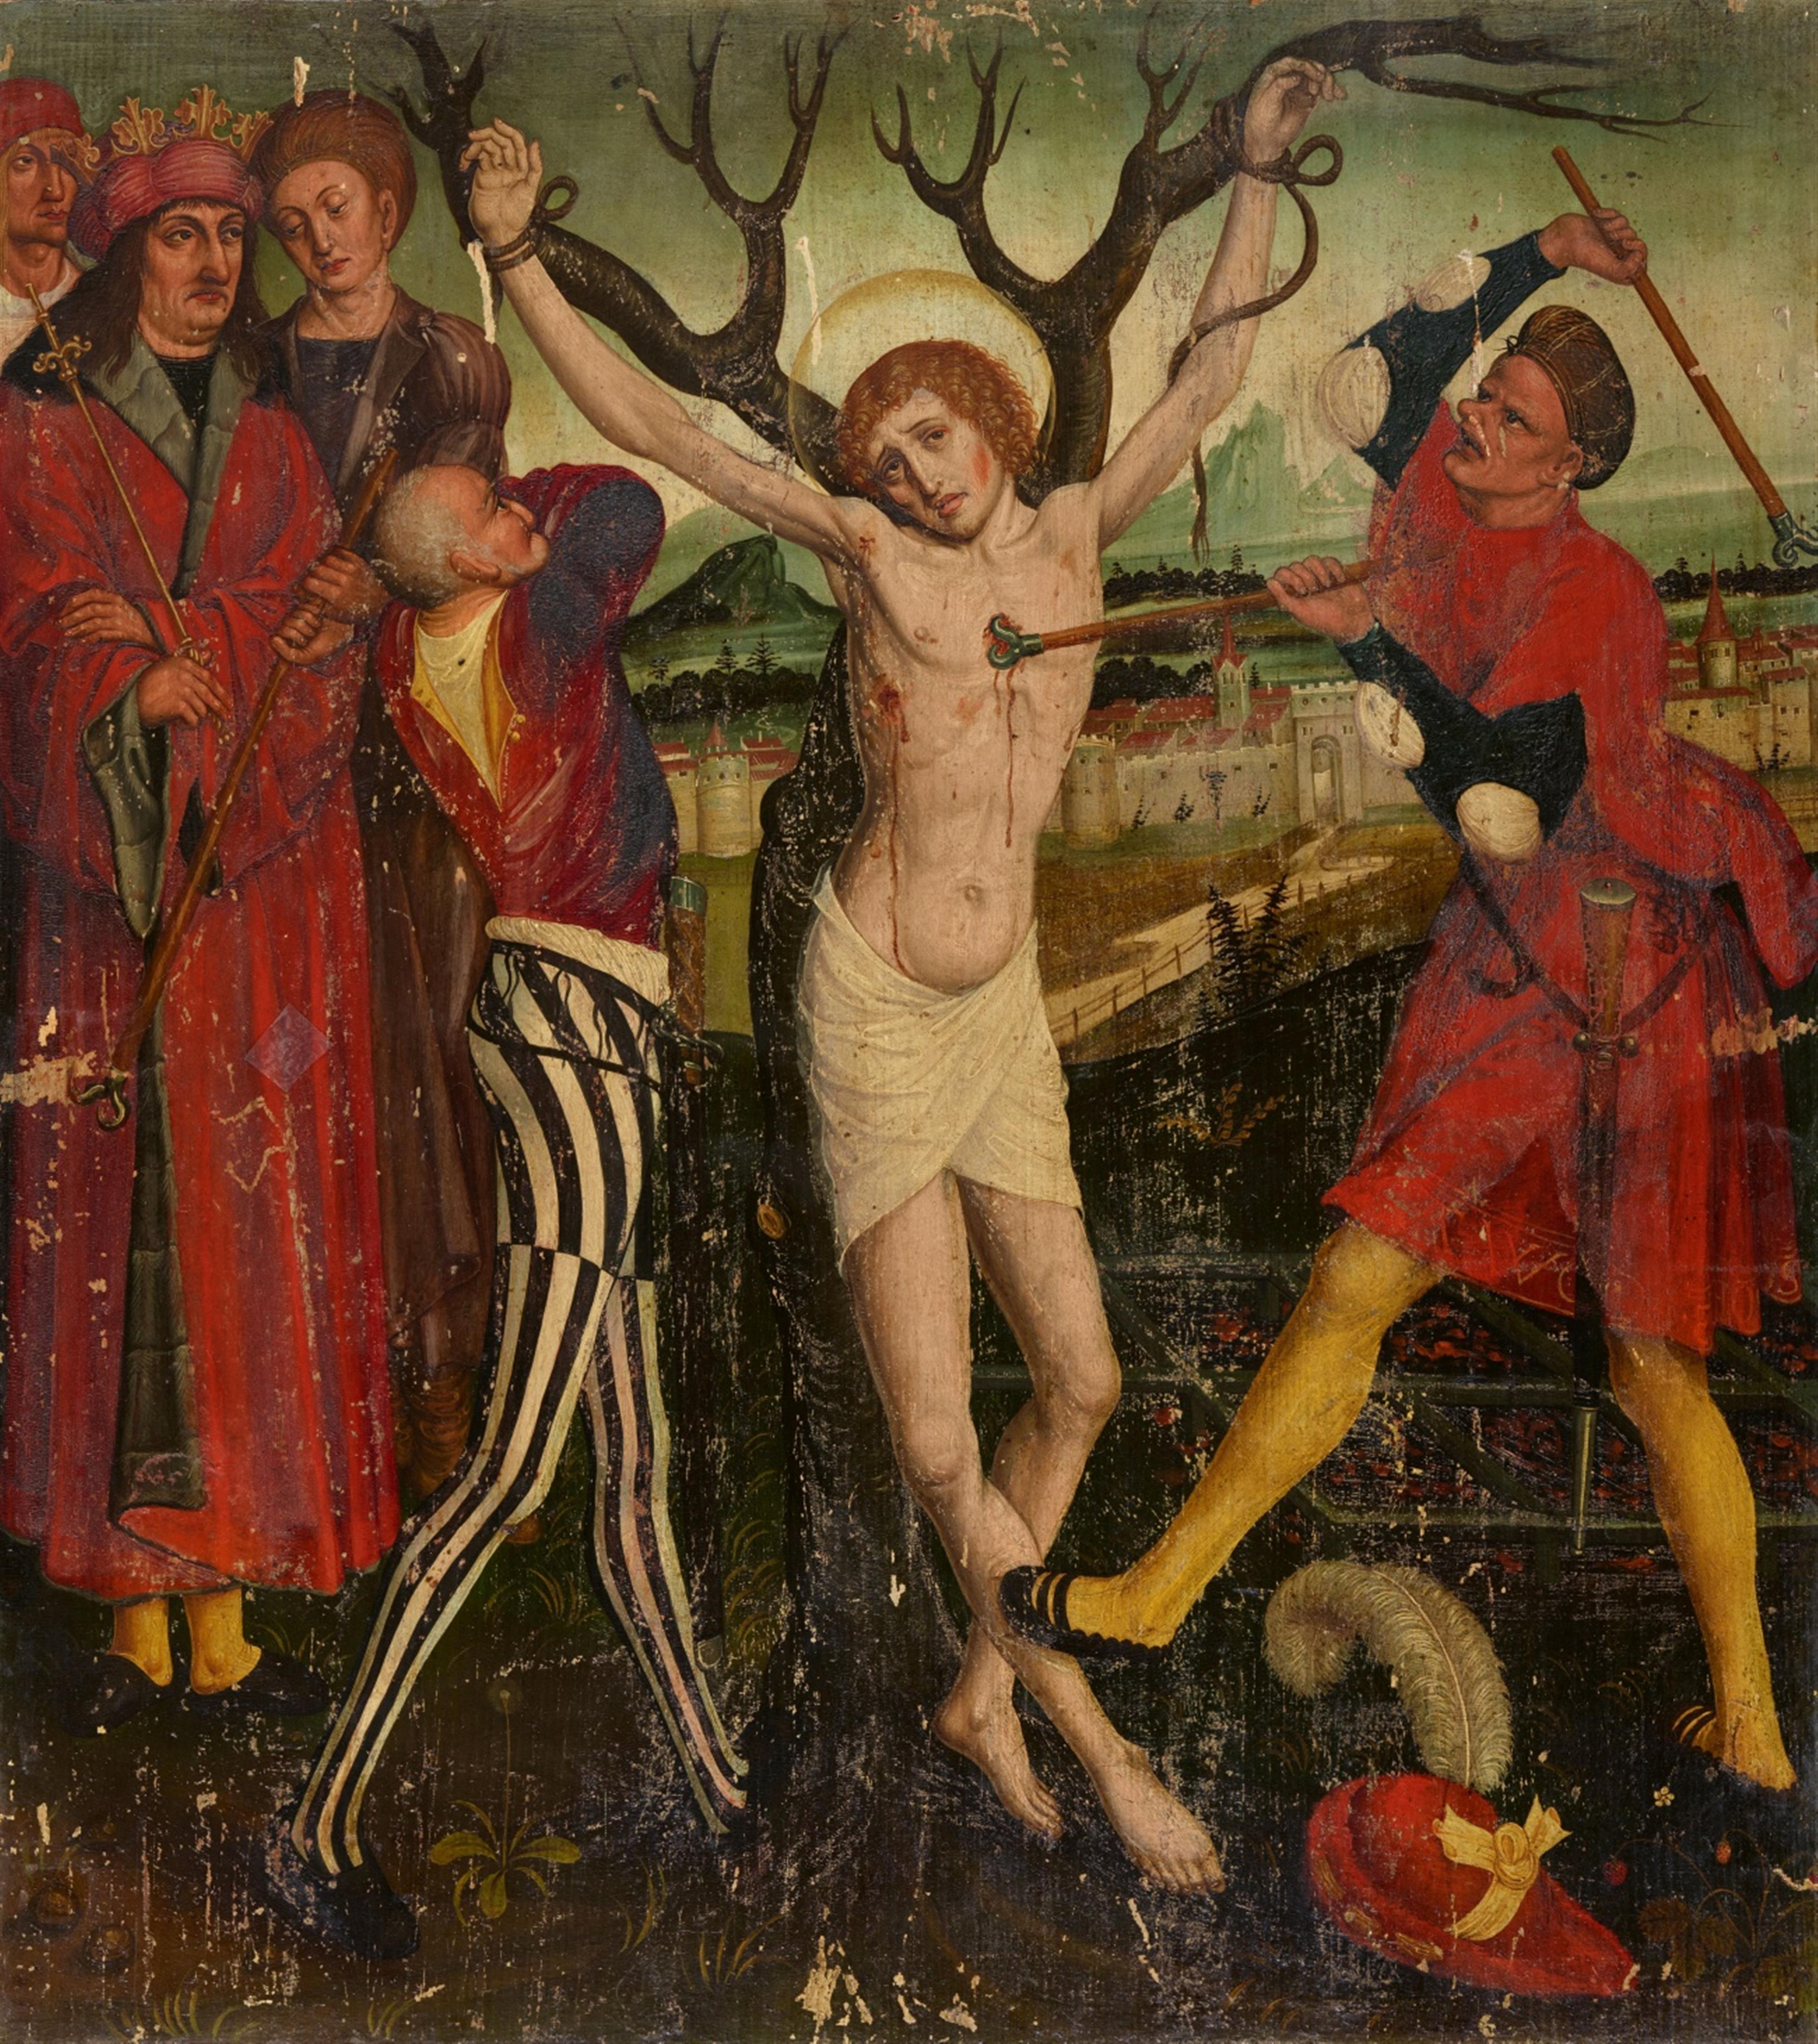 Jan Polack, studio of - The Crucifixion (exterior) the Flagellation of Saint Laurence (interior) - image-2